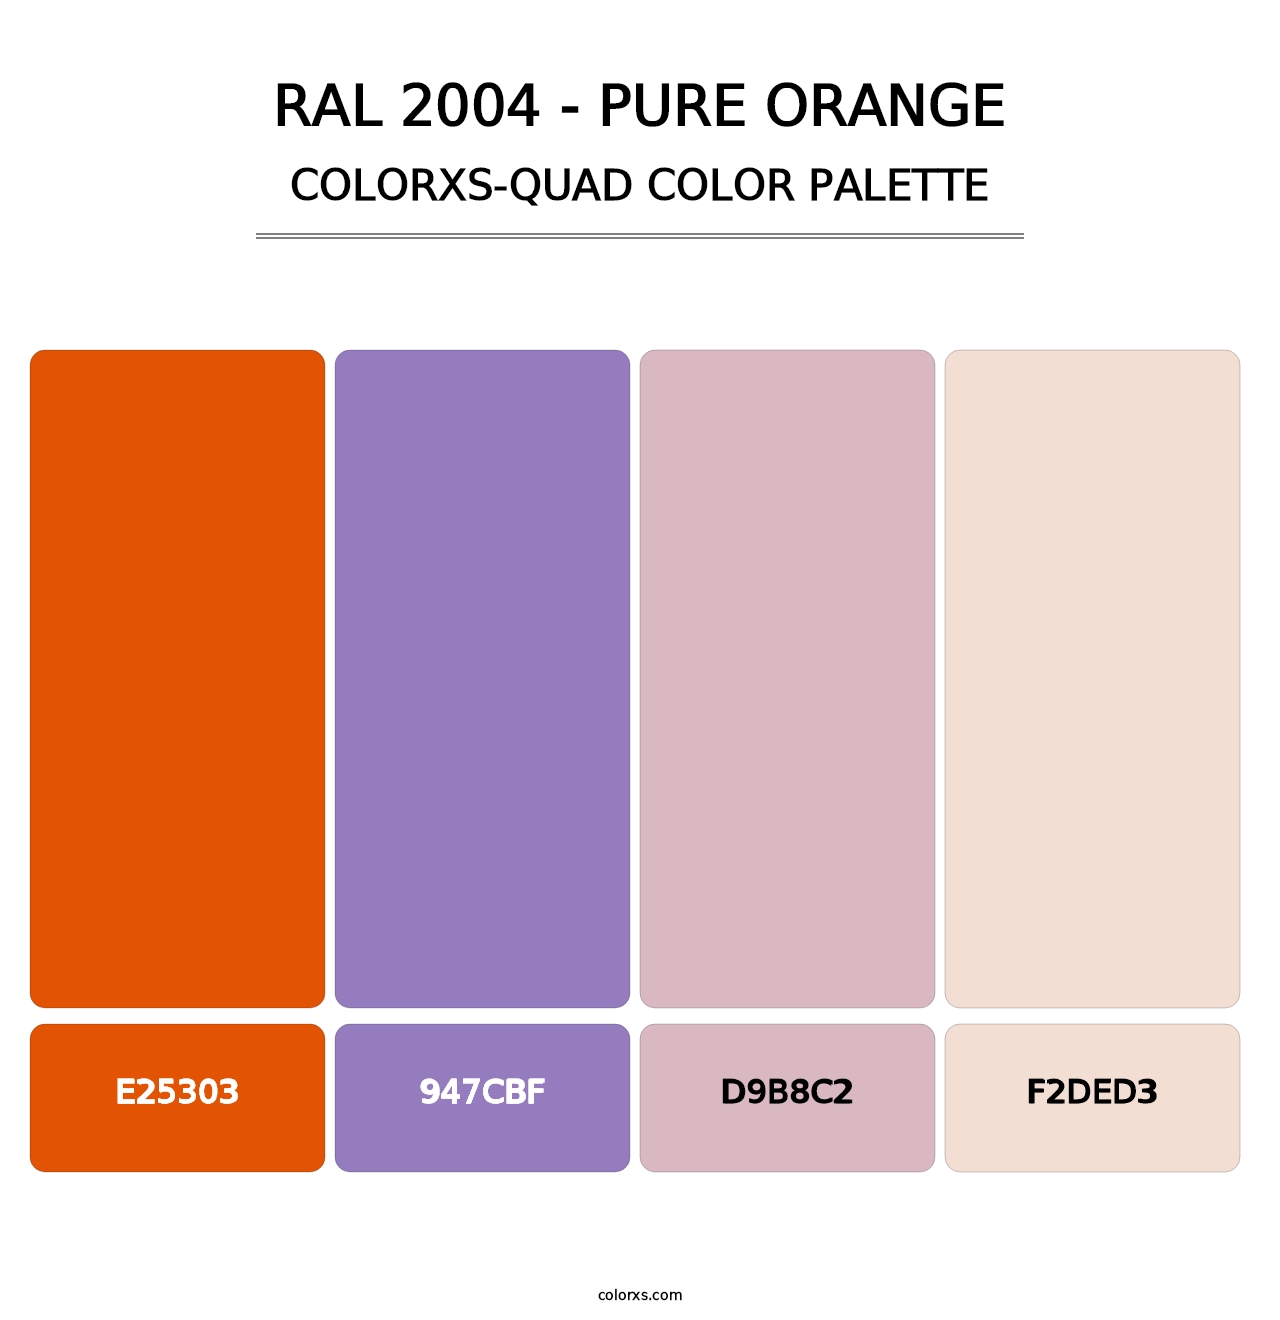 RAL 2004 - Pure Orange - Colorxs Quad Palette